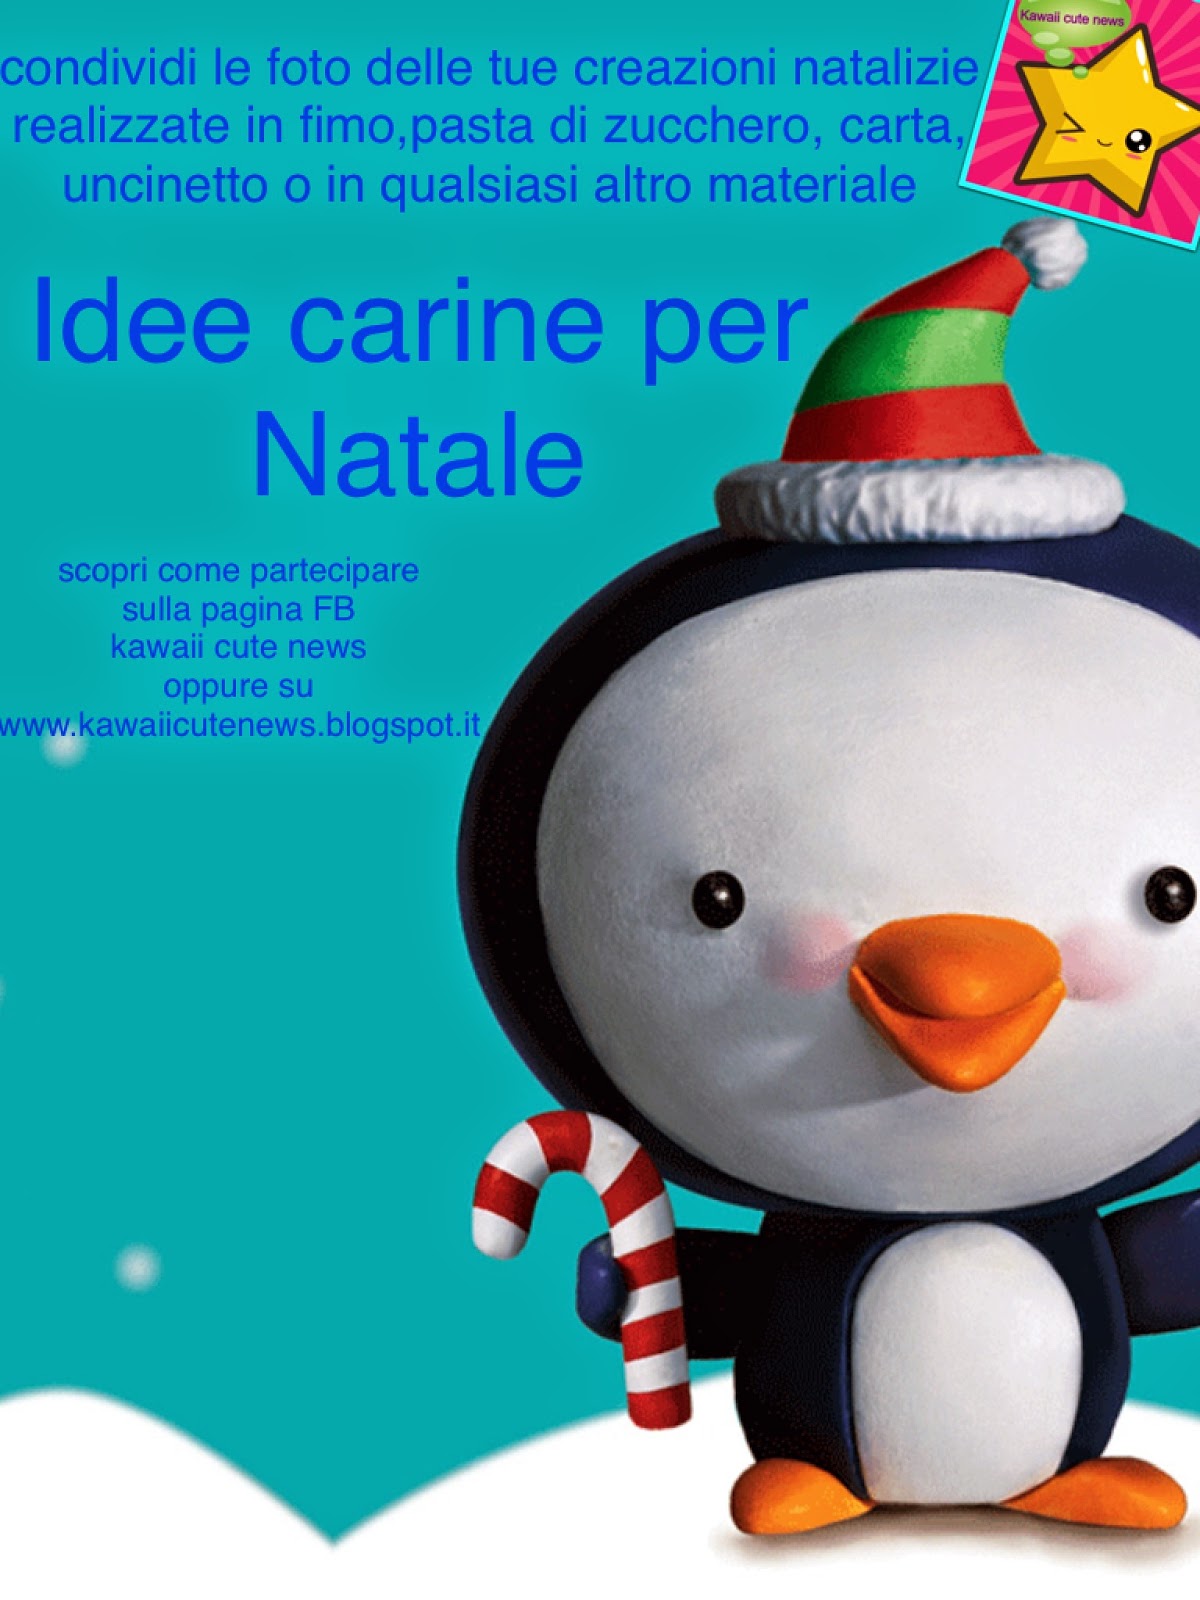 Immagini Natalizie Kawaii.Kawaii Cute News Idee Carine Per Natale